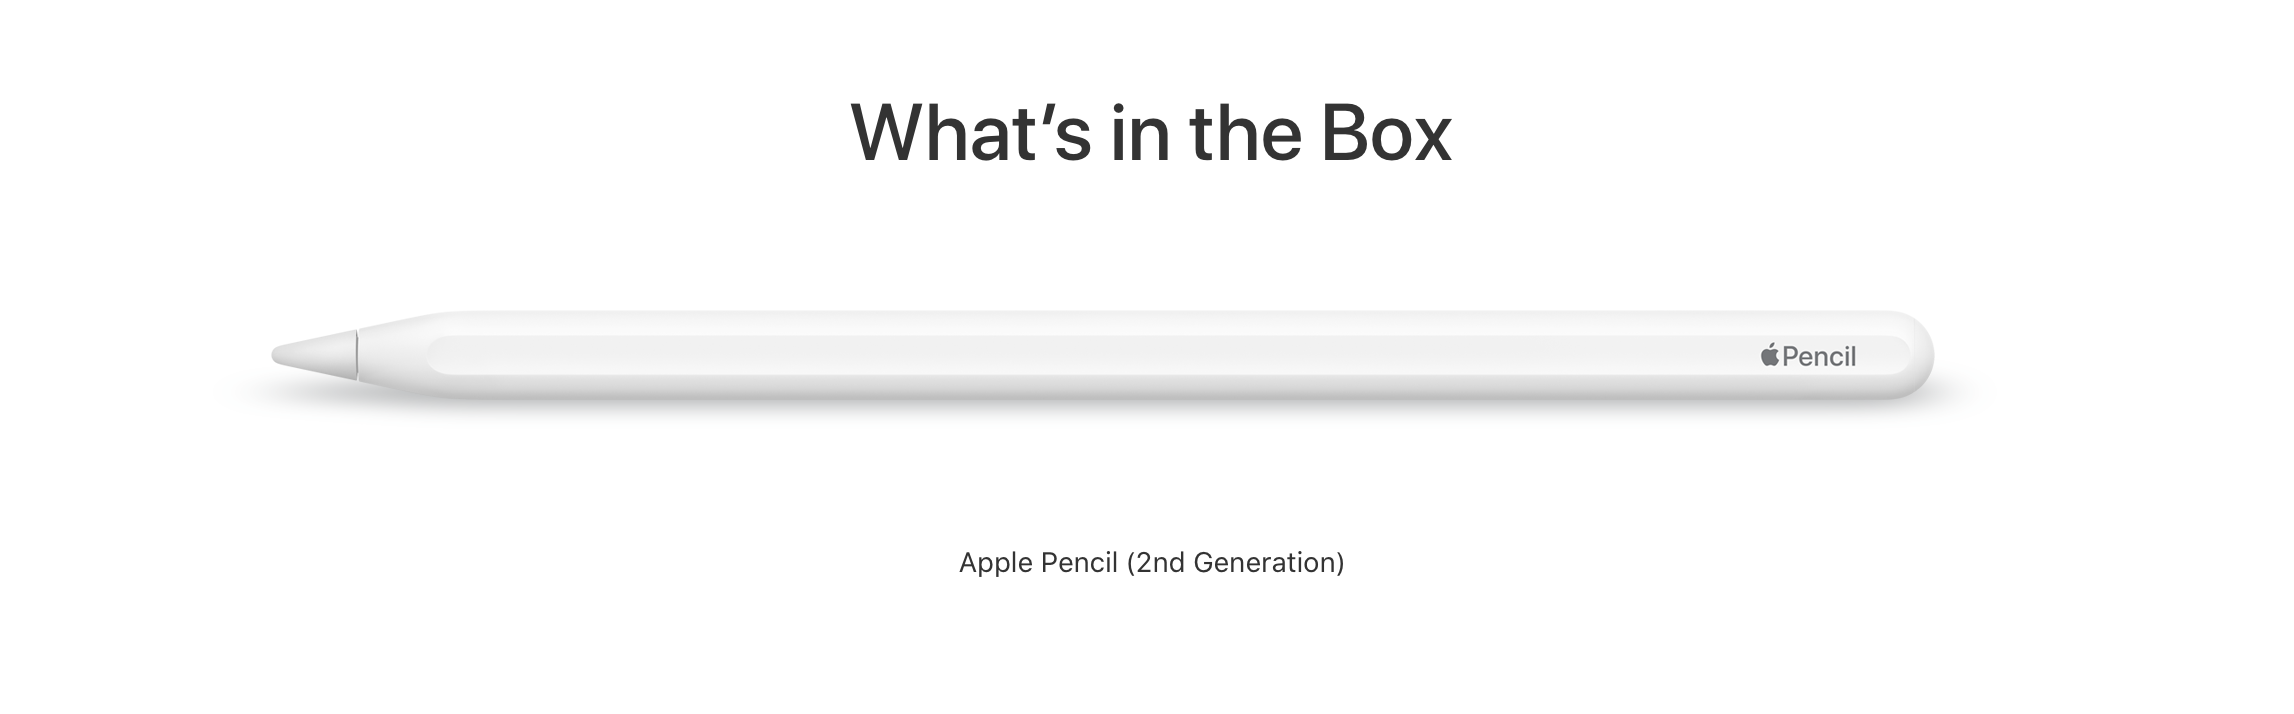 Apple Pencil Equivalent